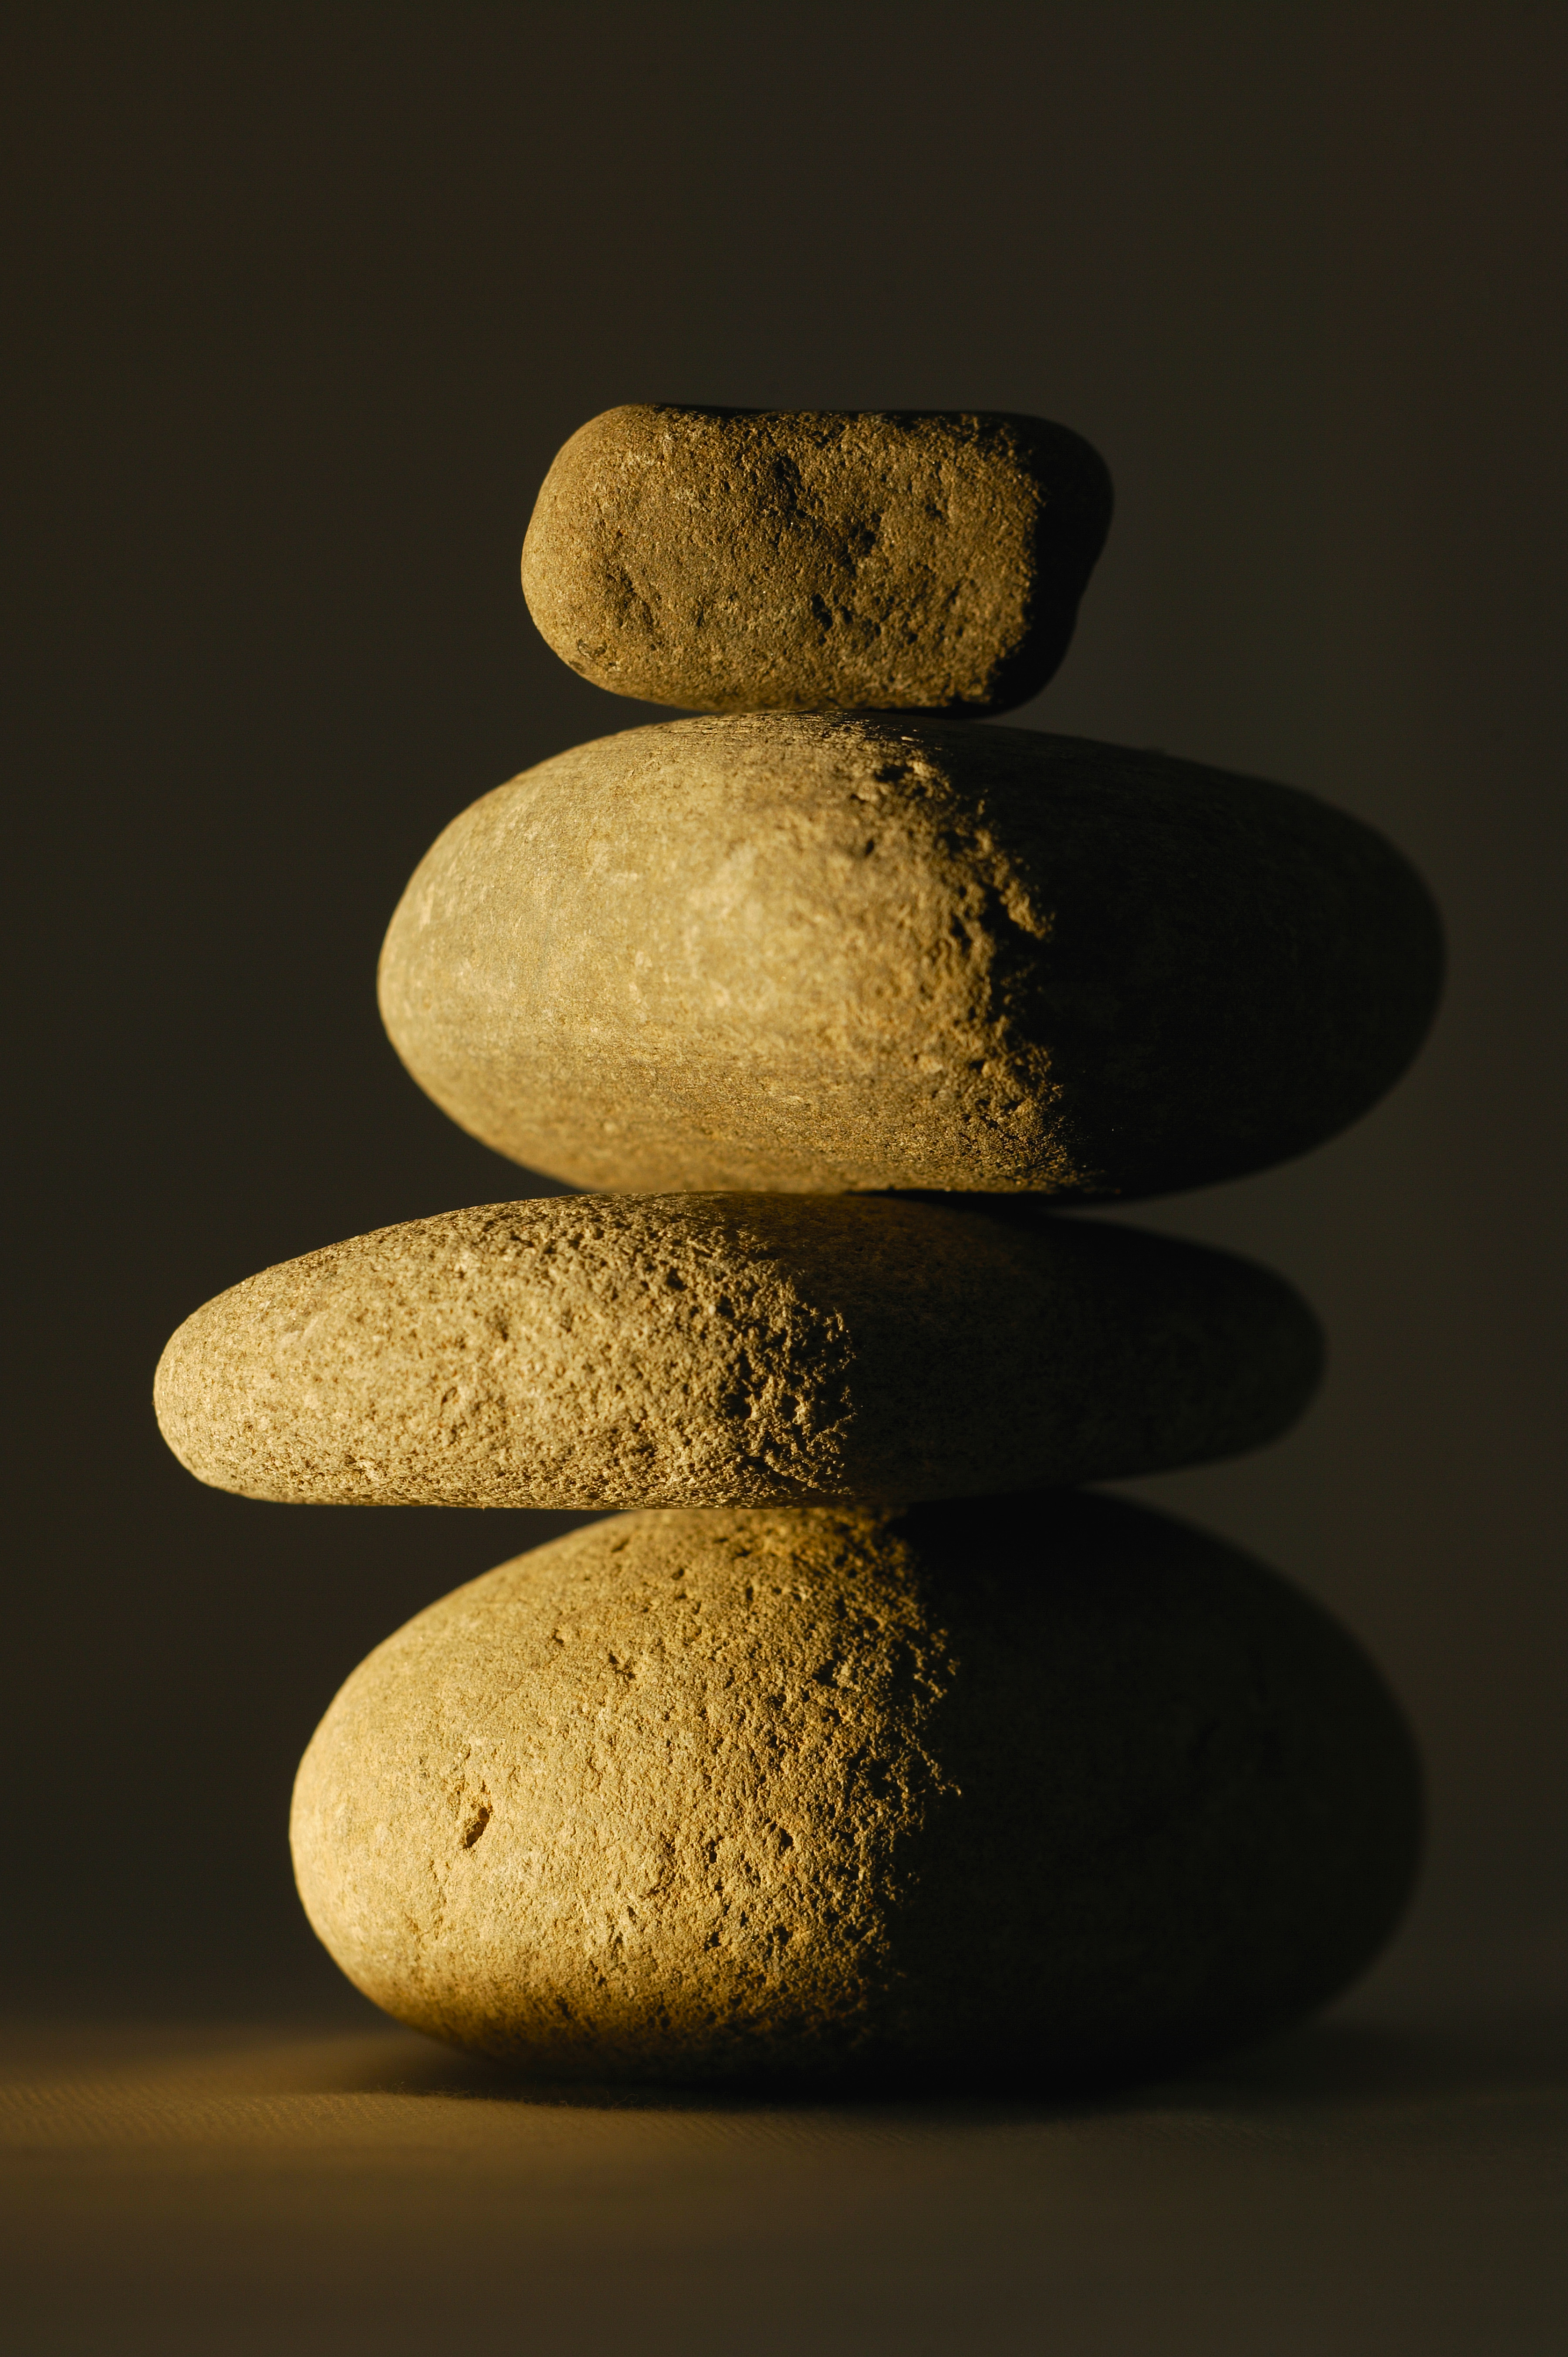 Benefits of meditation balancing river rocks shadow and light